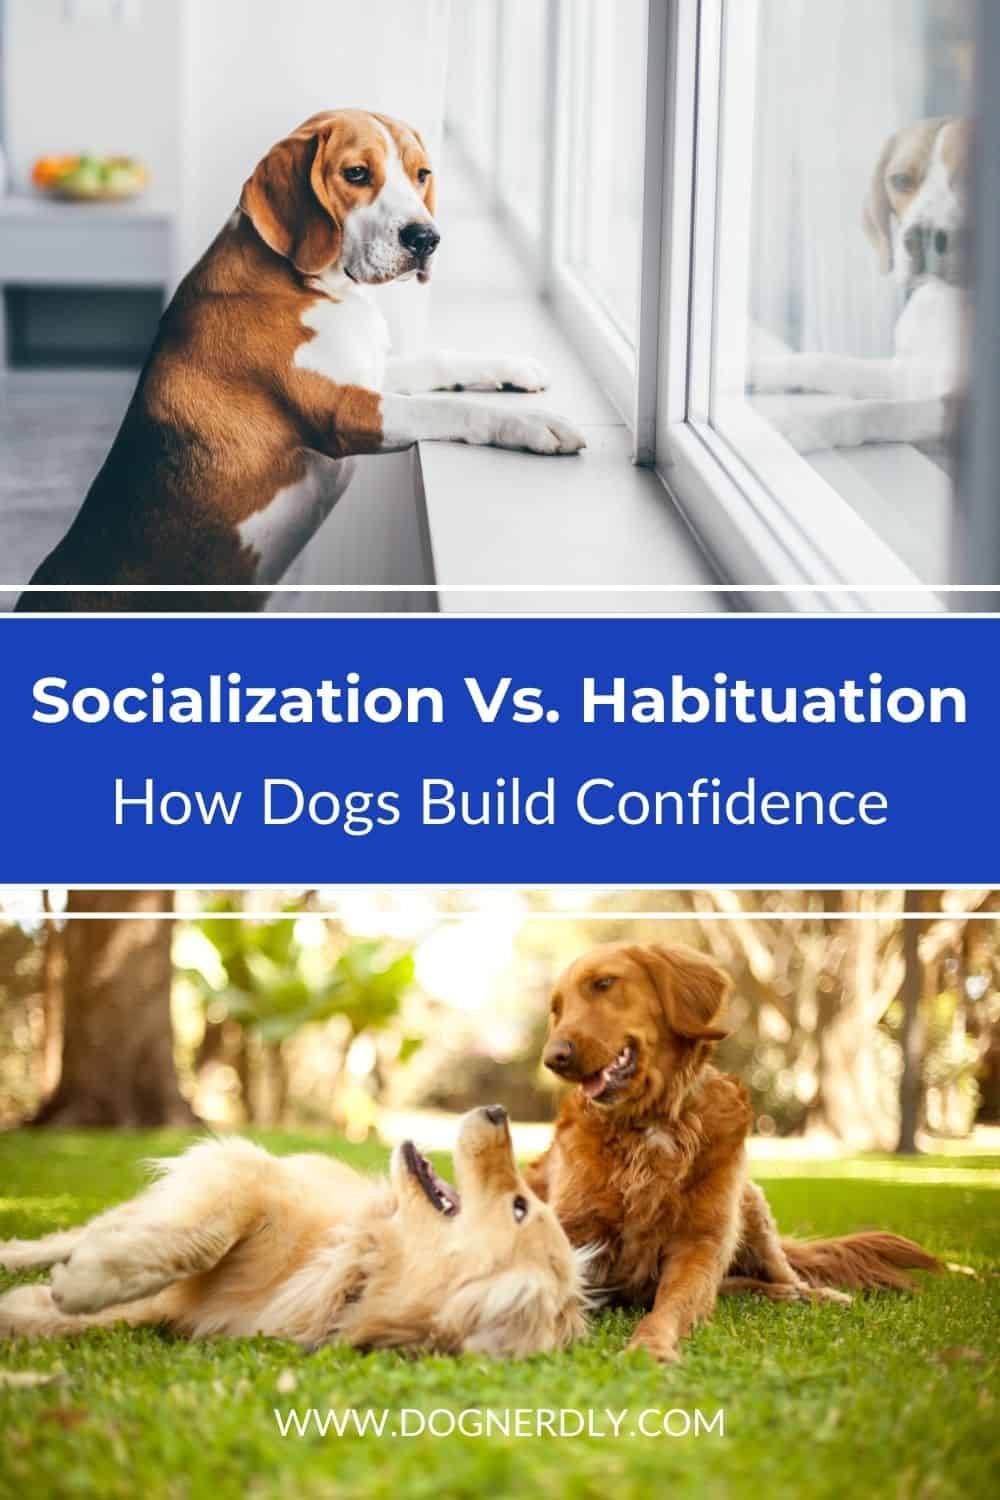 Socialization vs Habituation: 2 Ways Dogs Build Confidence